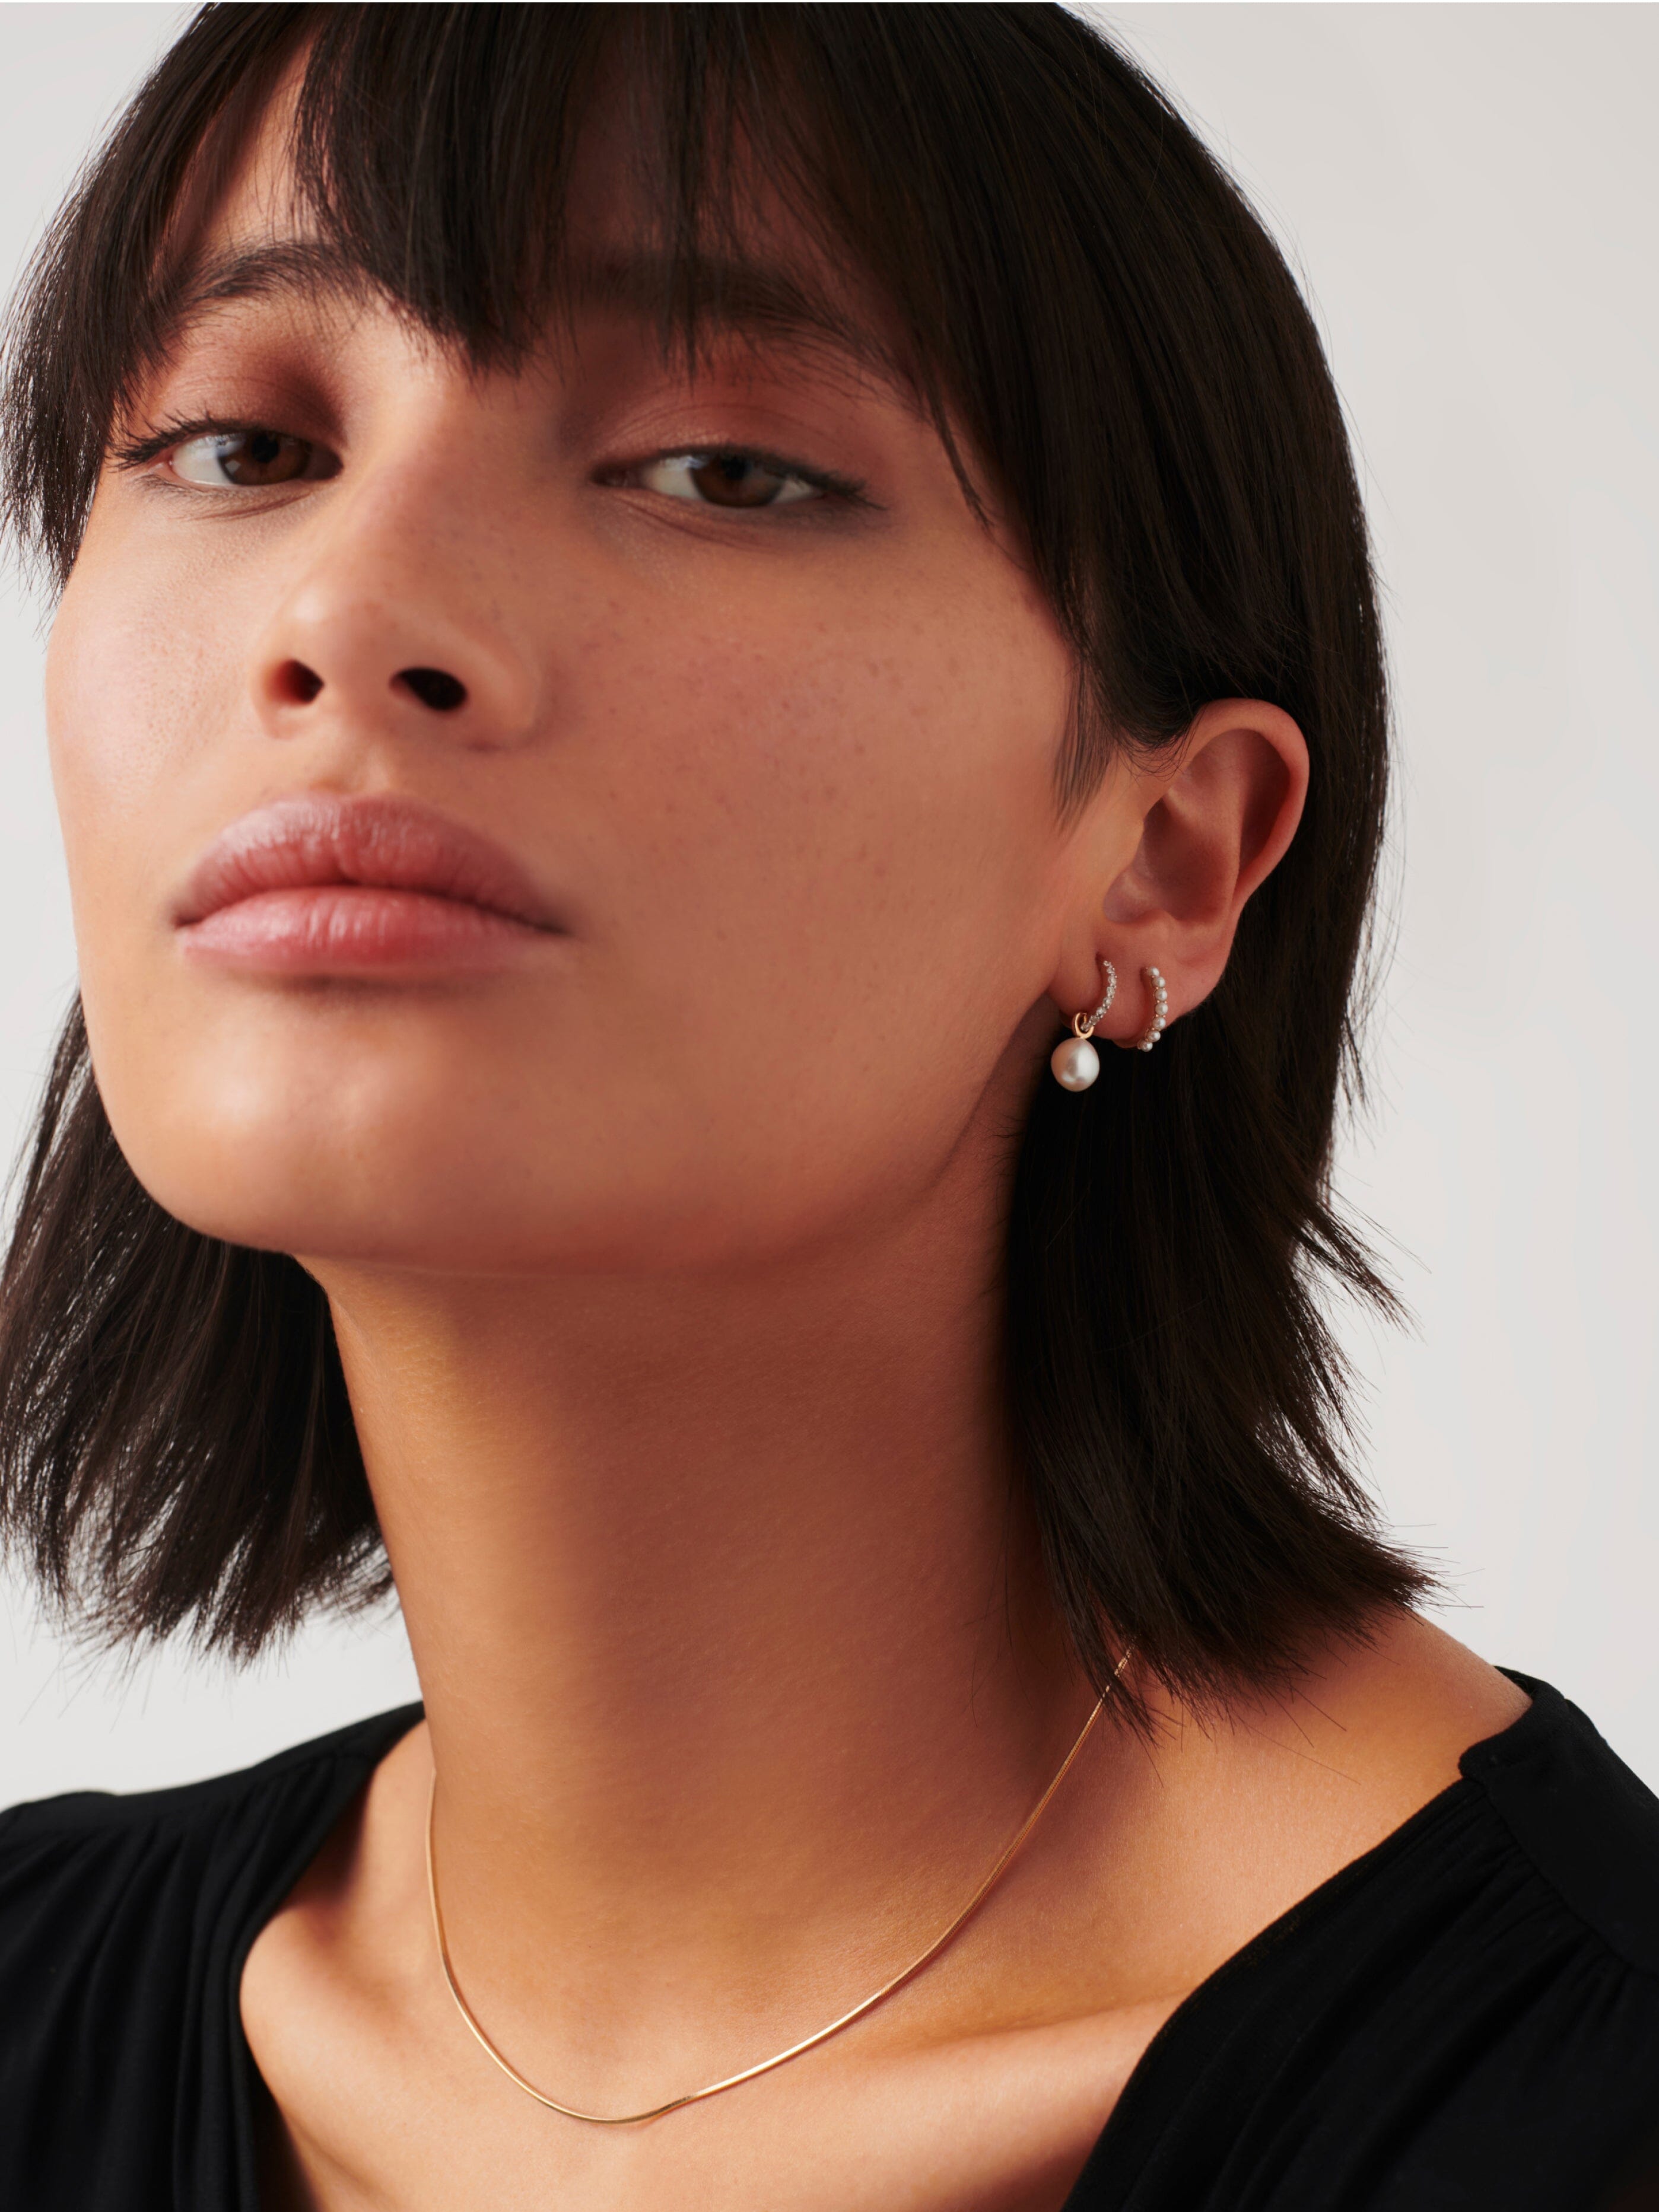 Fine Diamond & Pearl Charm Hoop Earrings | 14ct Solid Gold/Pearl & Diamond Earrings Missoma 